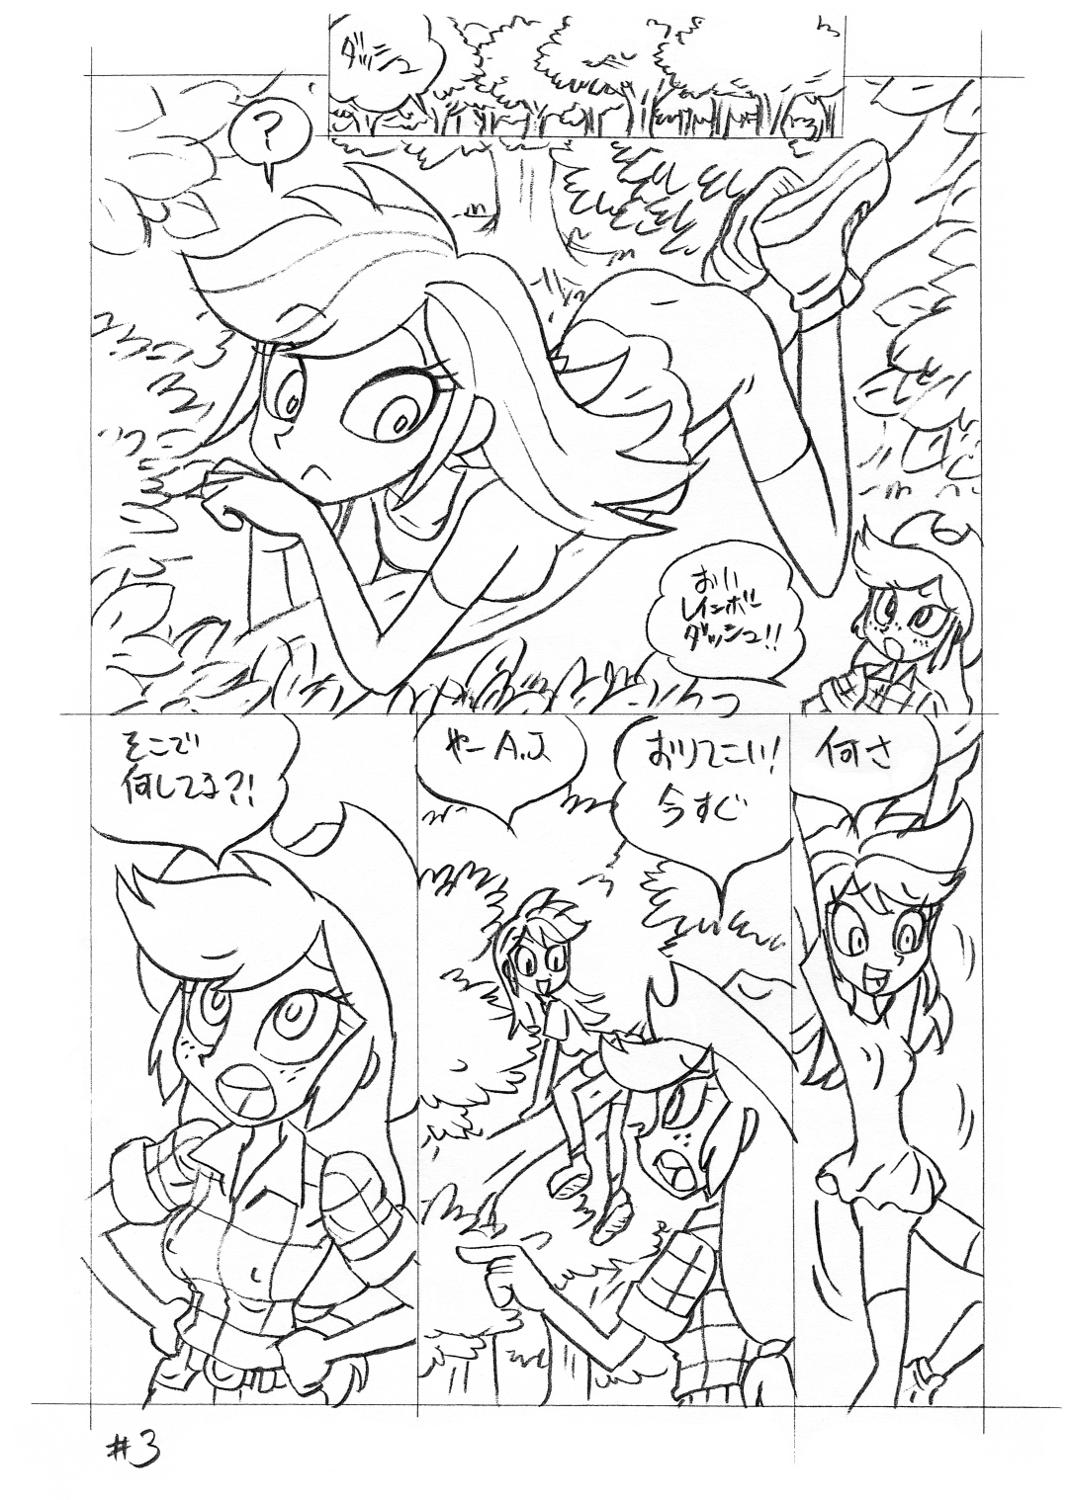 Lezbi Psychosomatic Counterfeit EX- A.J. in E.G. Style - My little pony friendship is magic Amateurs Gone - Page 2